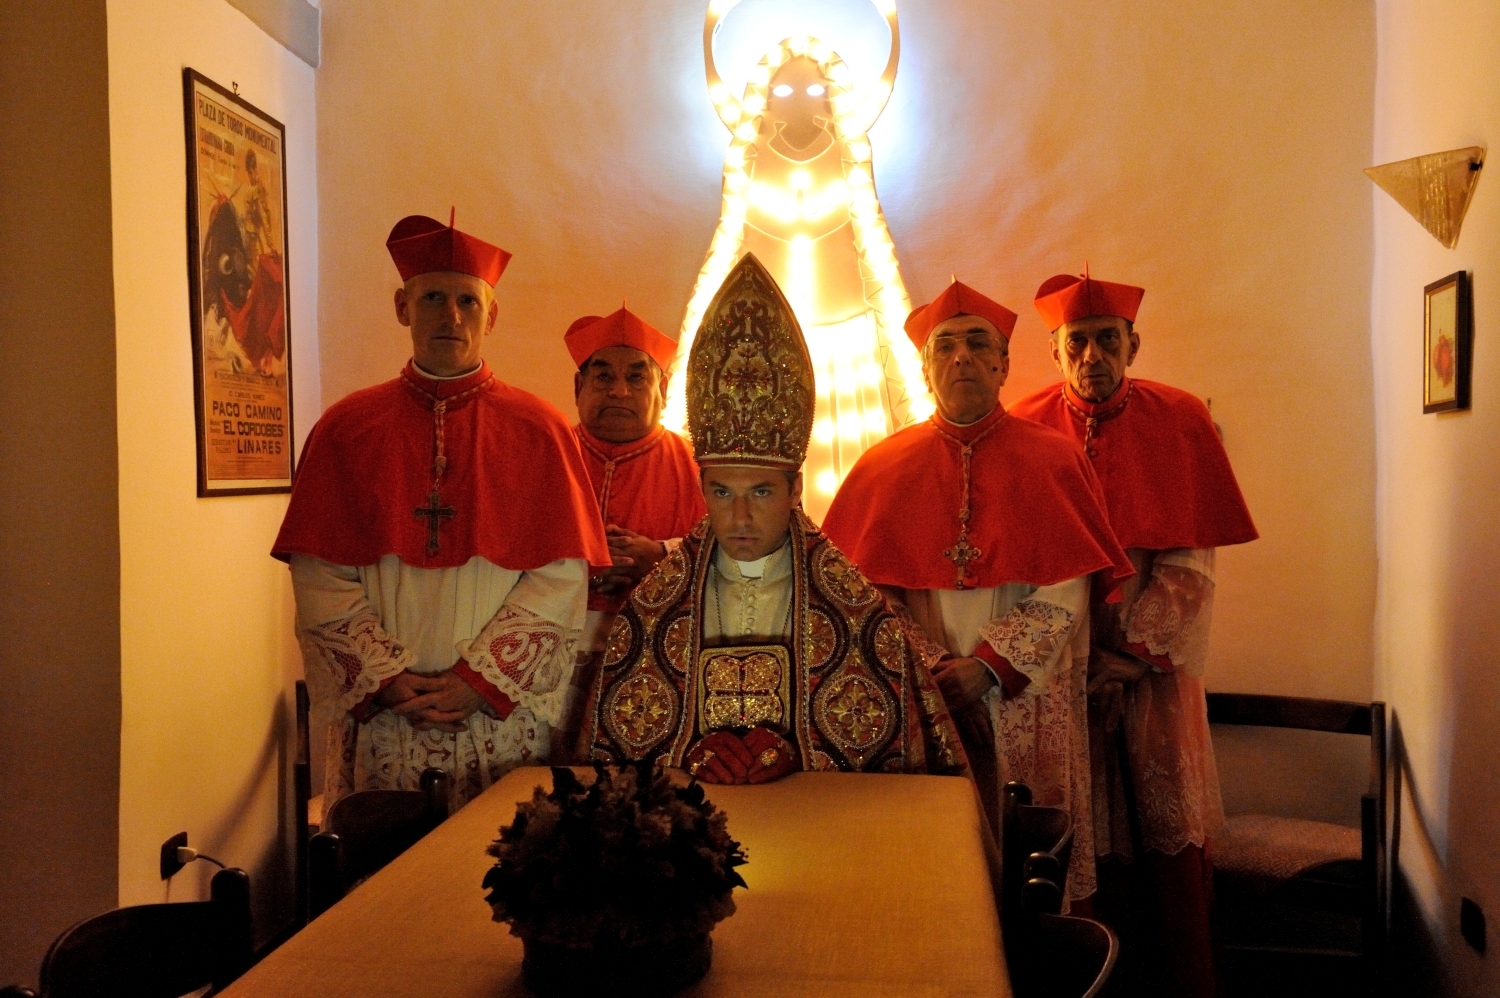 Cardinal Dussolier